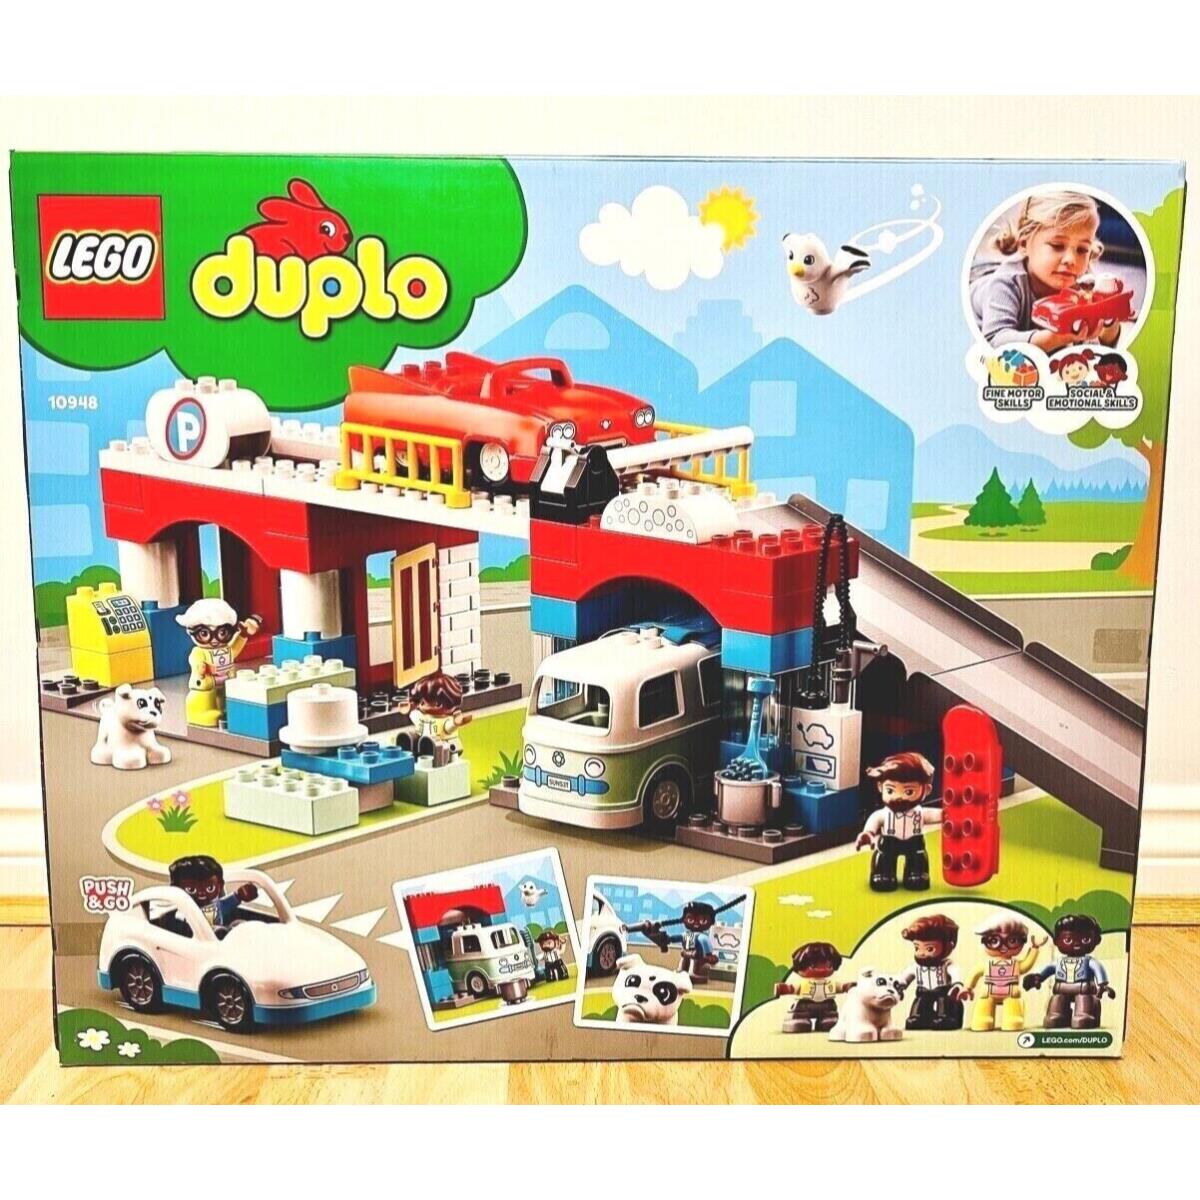 Lego Duplo Parking Garage and Car Wash 10948 Kid`s Building Toy Kit Set